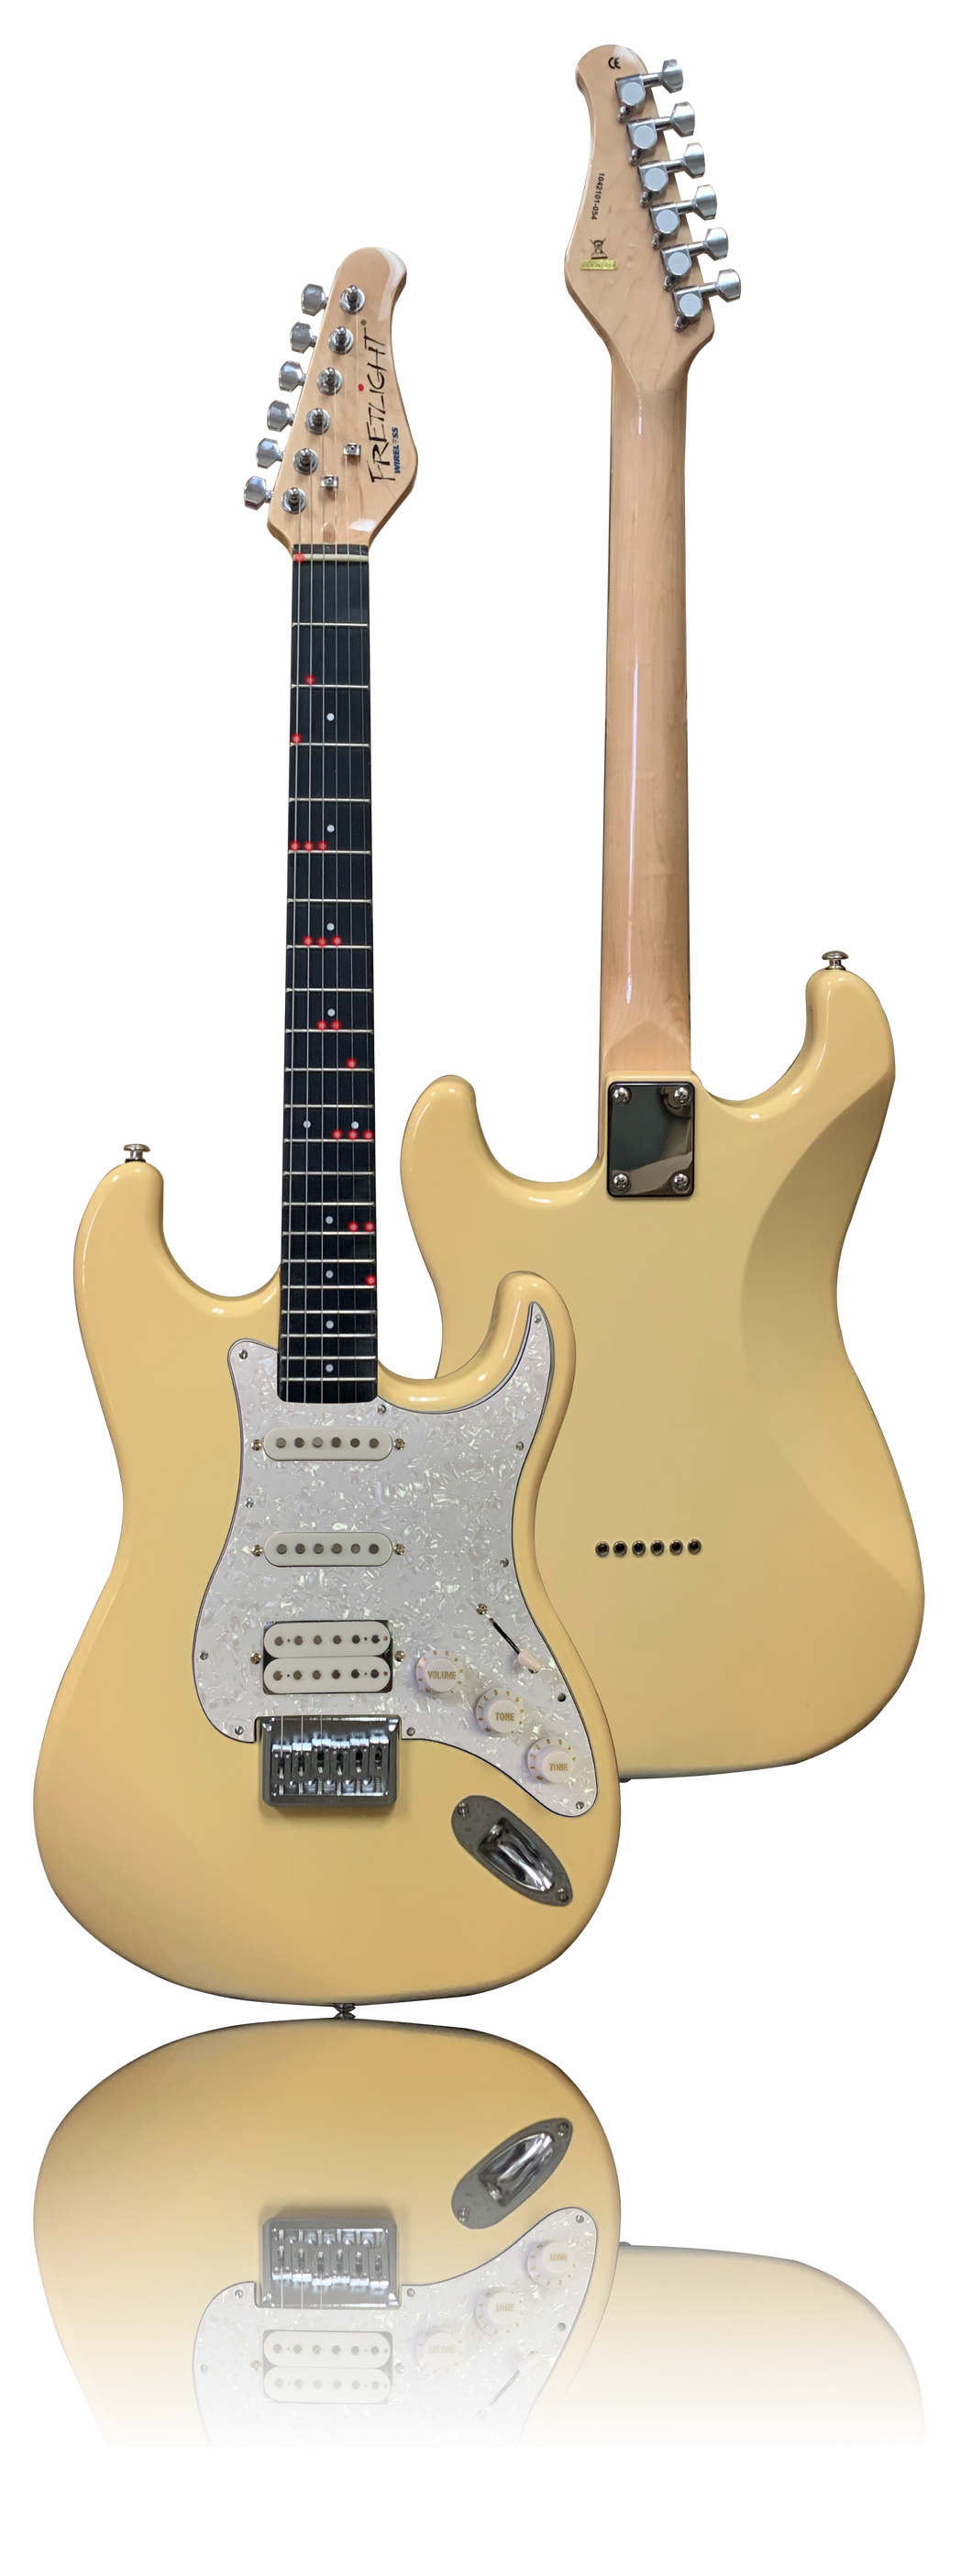 FG-621 Custom Vintage Yellow with White Pickguard